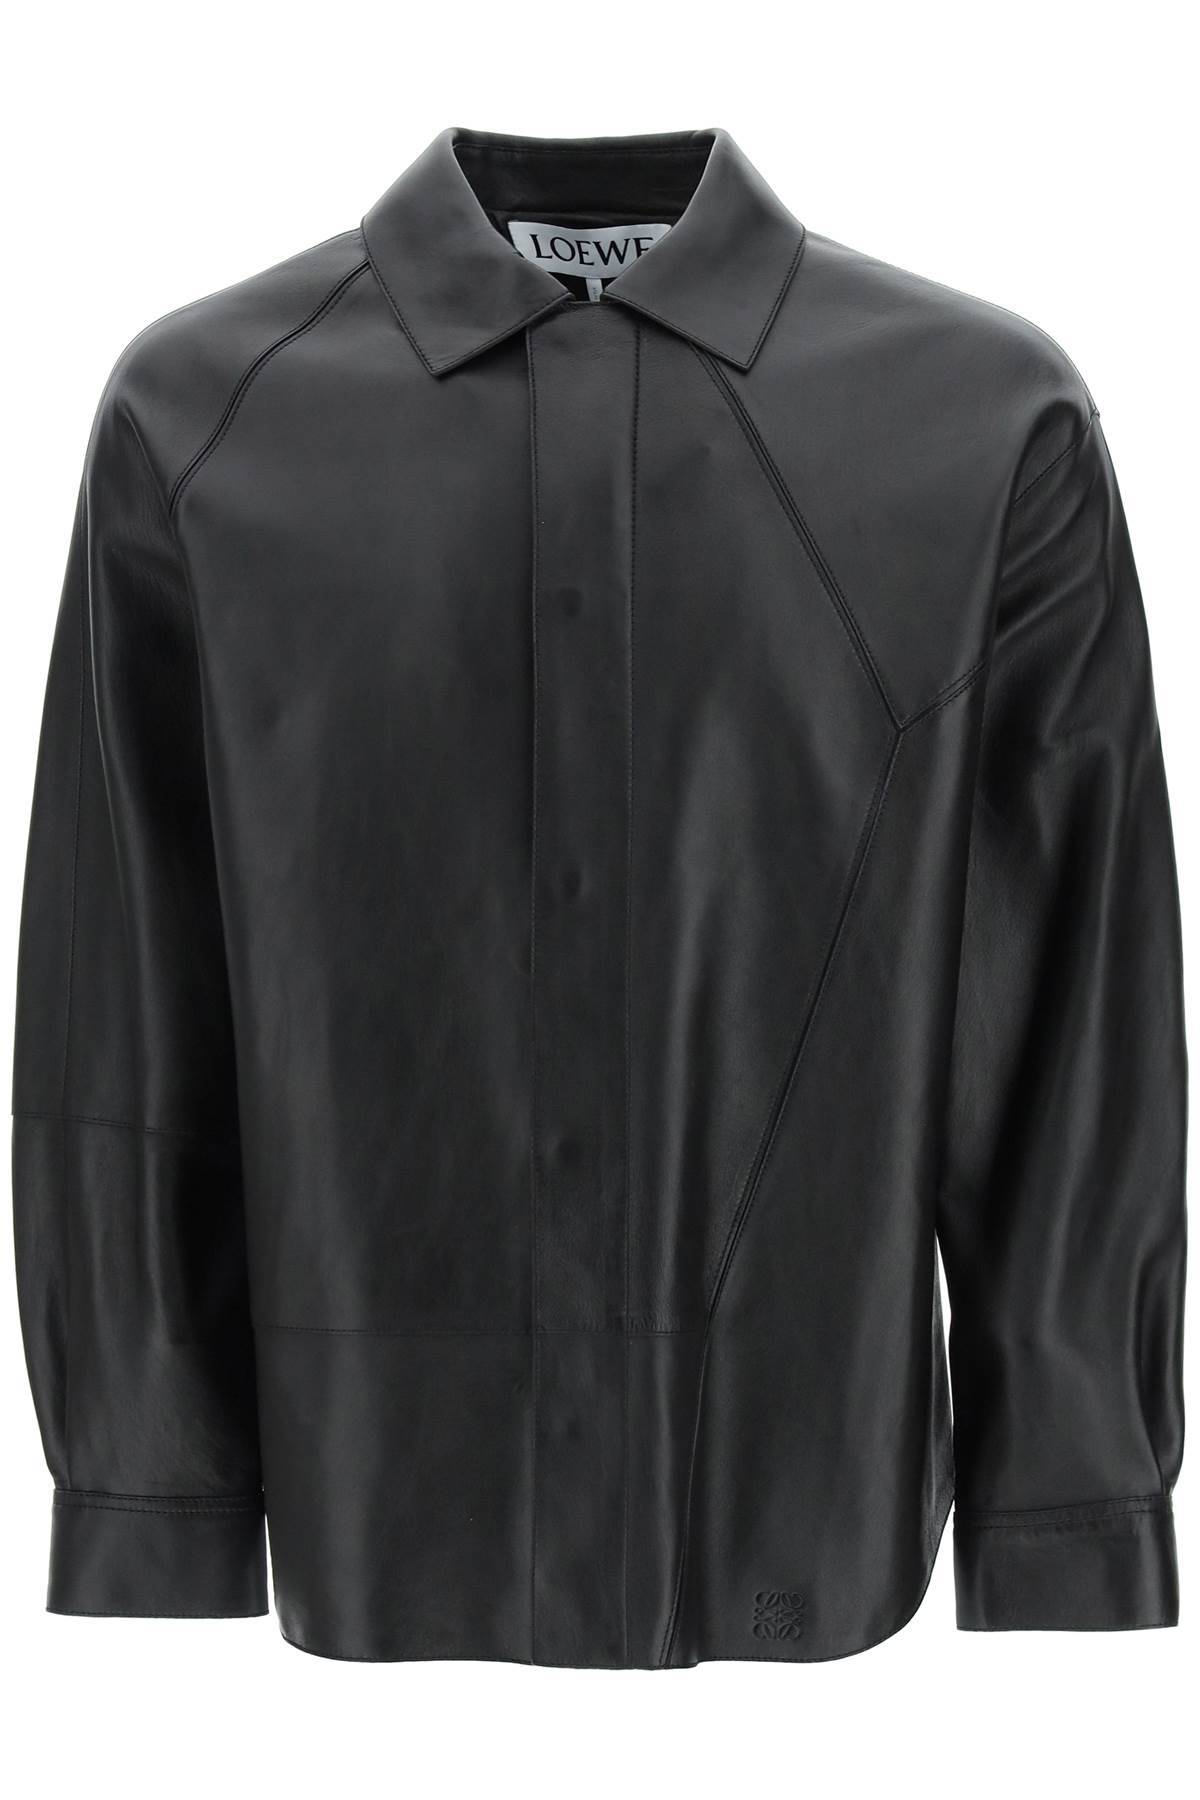 Loewe LOEWE asimmetric seams leather overshirt